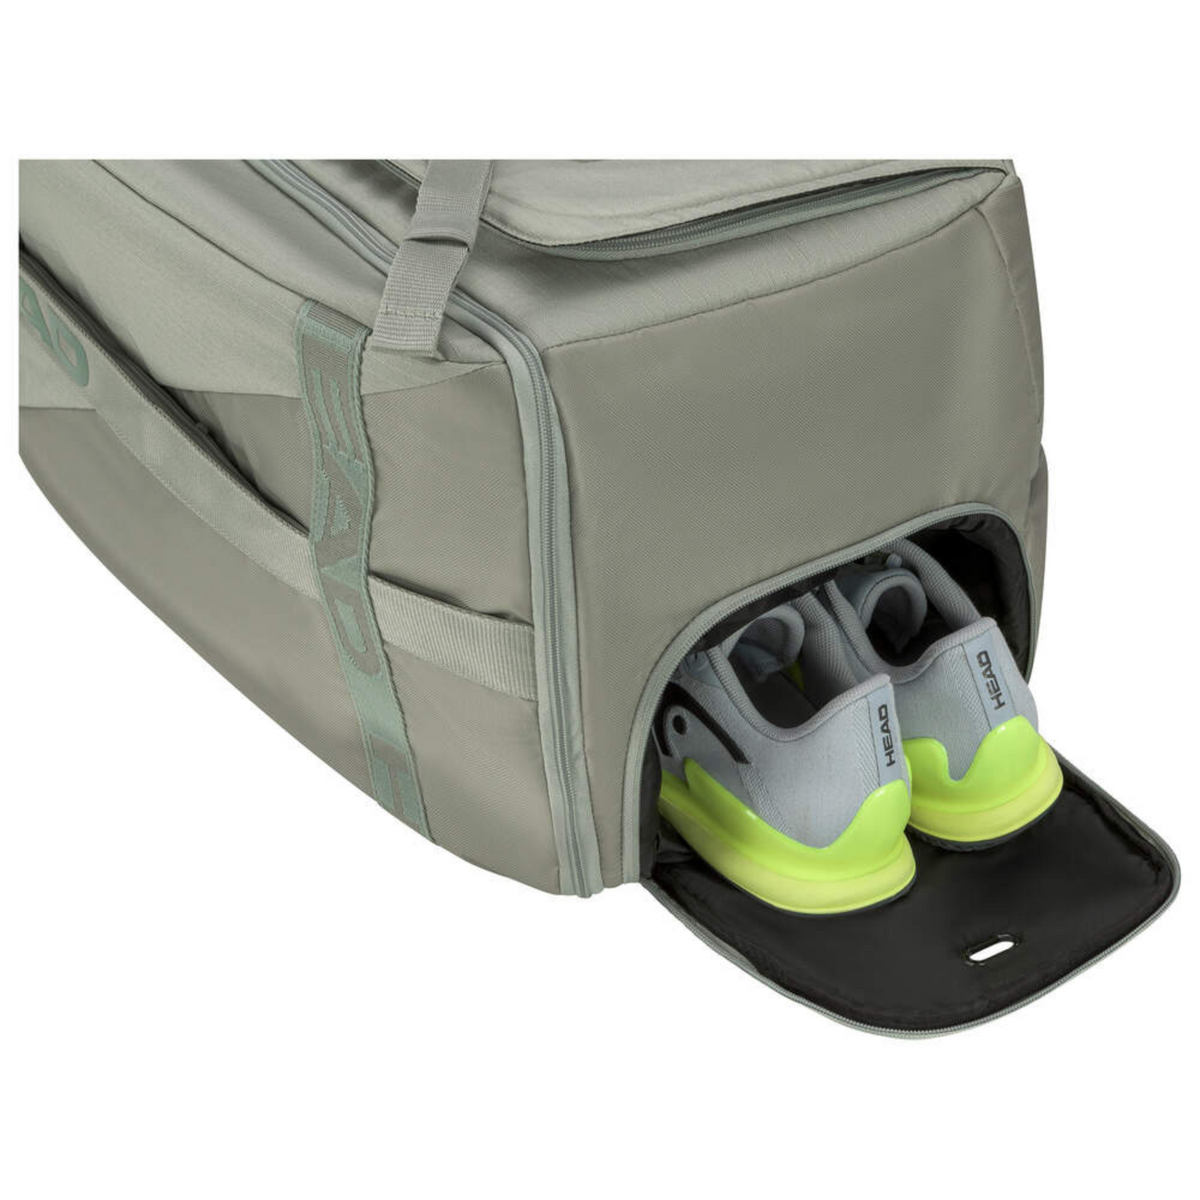 Head shoes inside the tennis equipment bag